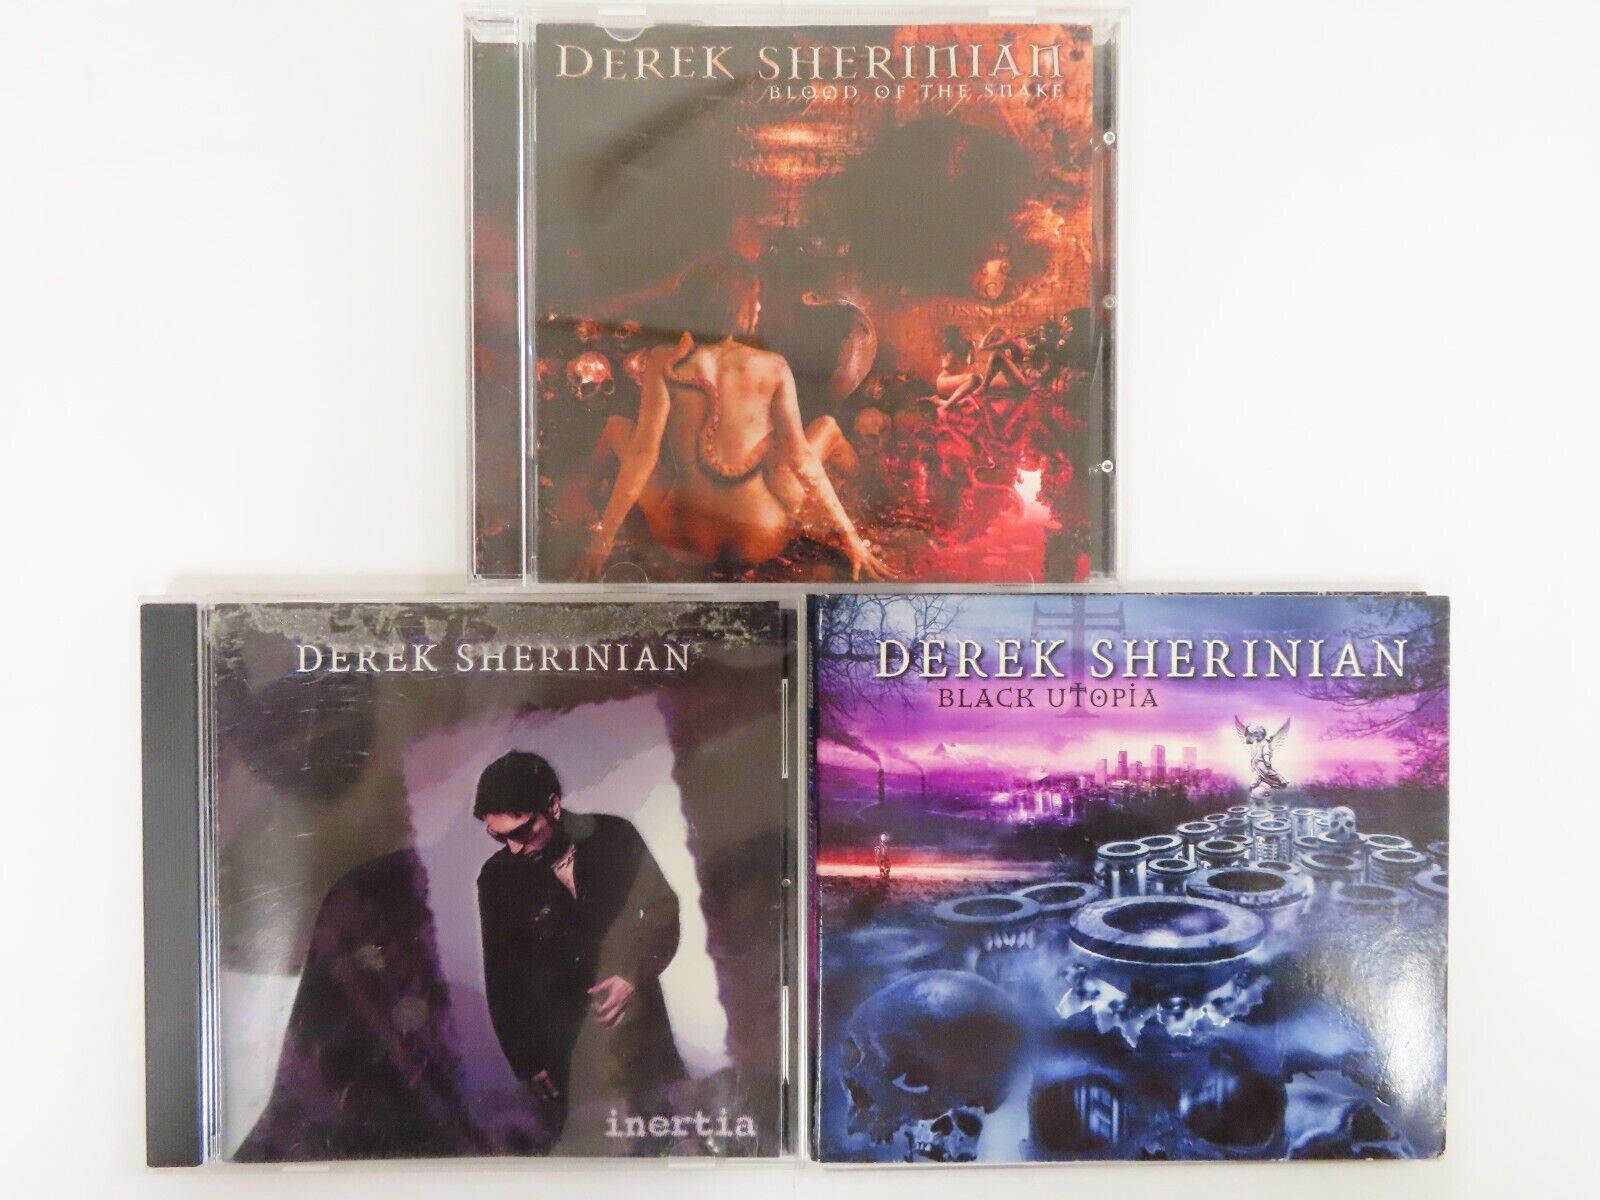 LOT OF 3 DEREK SHERINIAN MUSIC CDS - Blood of the Snake, Inertia, Black Utopia !